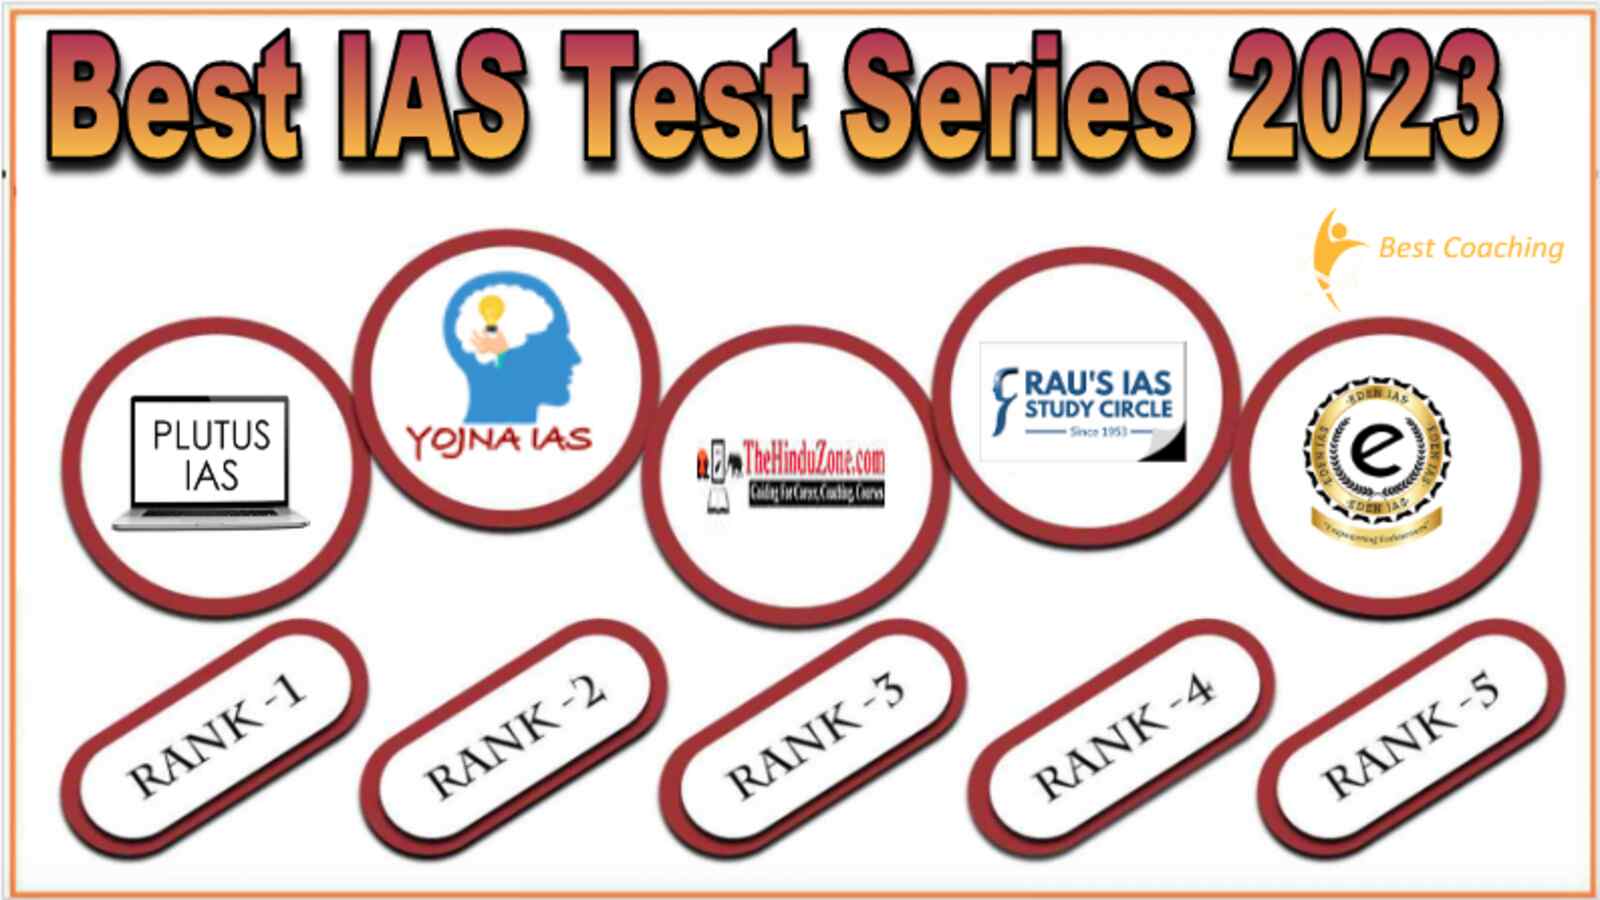 Best IAS Test series 2023